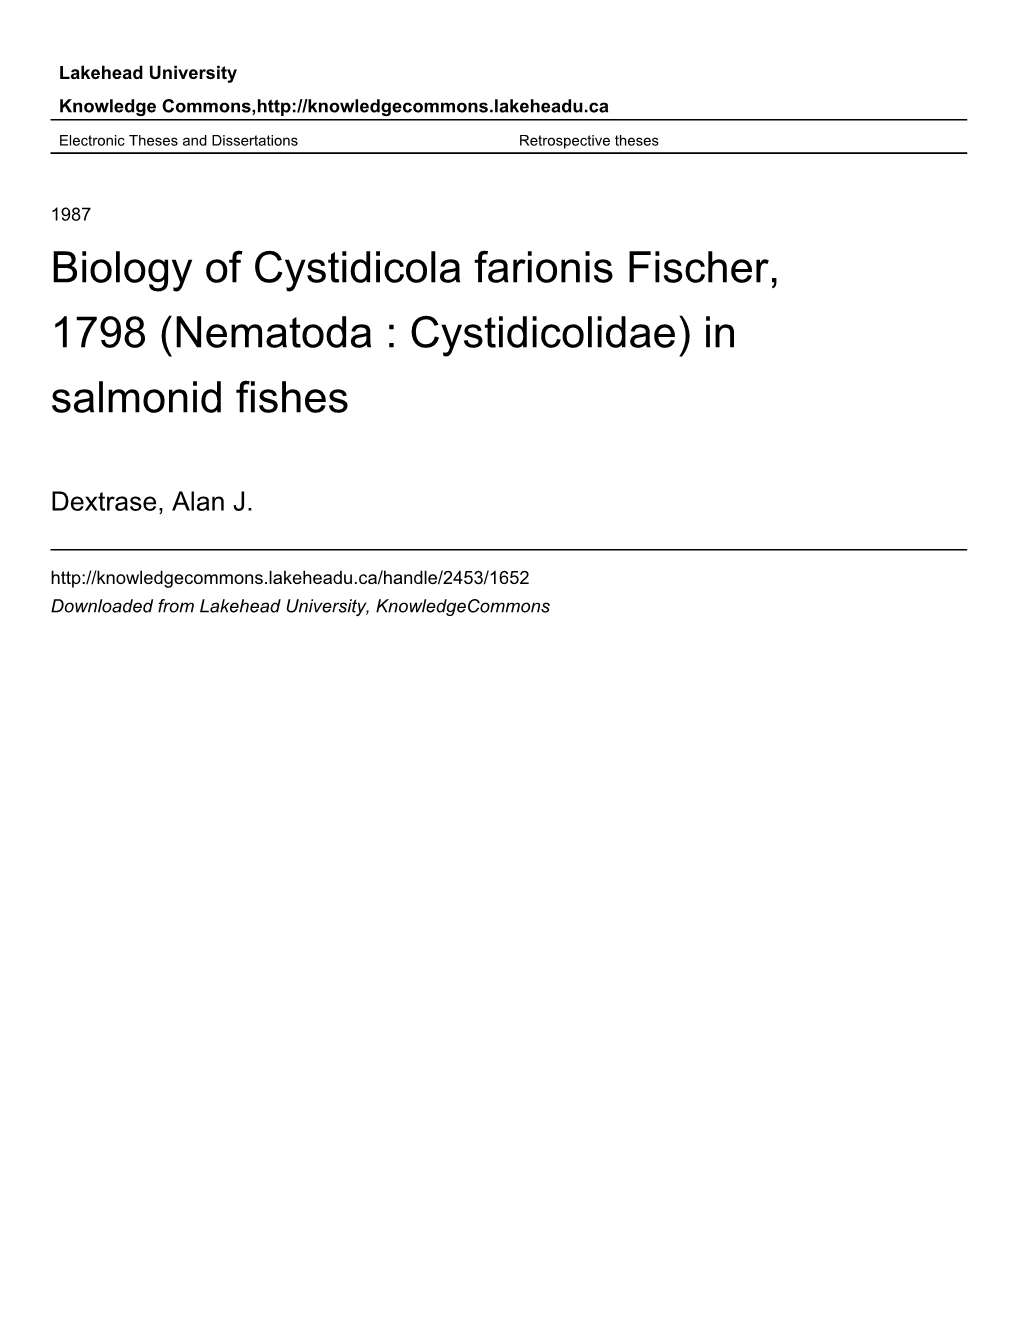 Biology of Cystidicola Farionis Fischer, 1798 (Nematoda : Cystidicolidae) in Salmonid Fishes